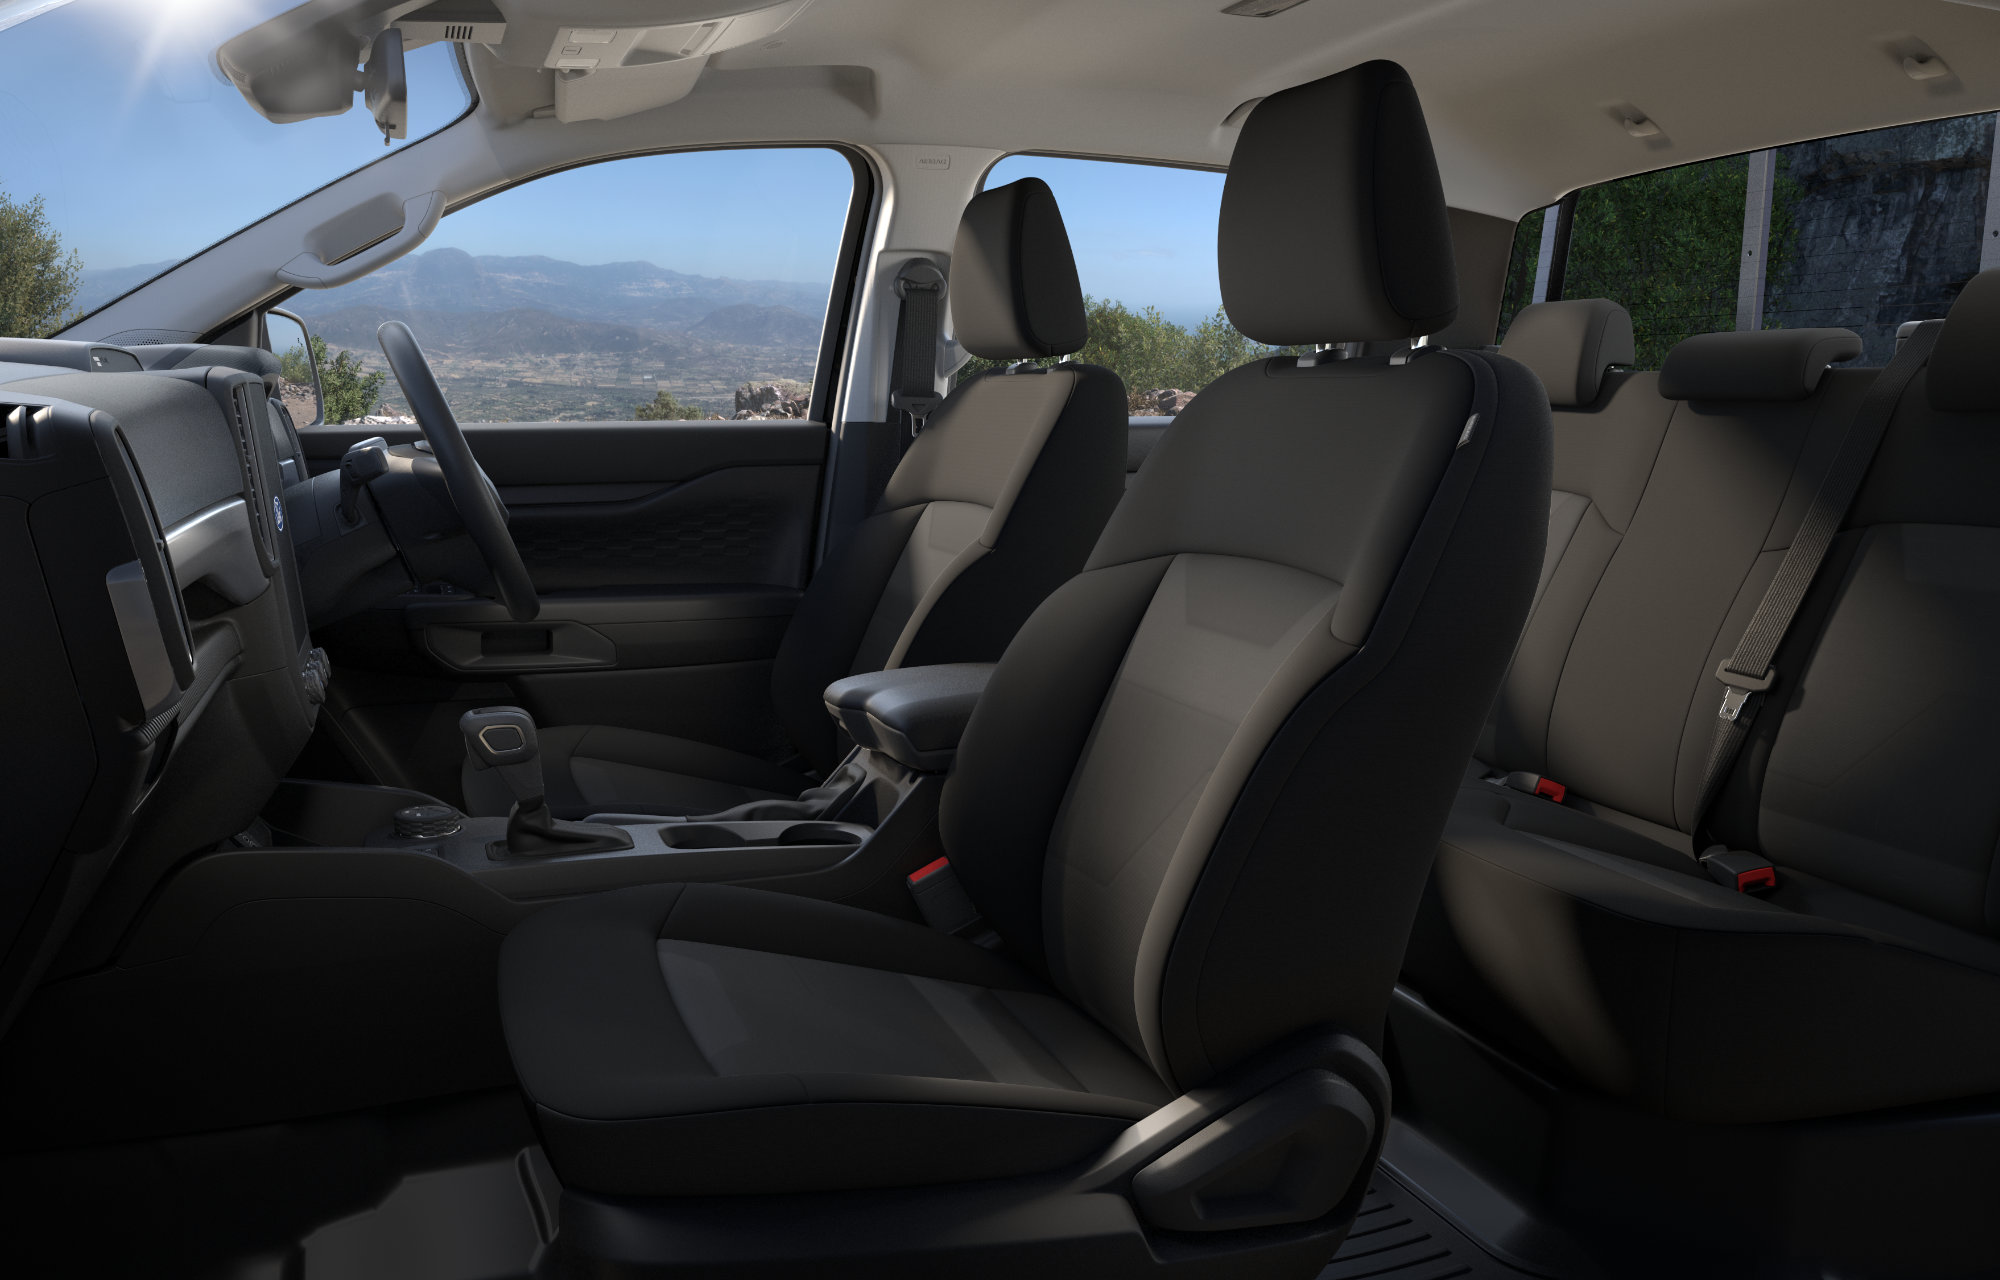 Ford Ranger XLT Seats